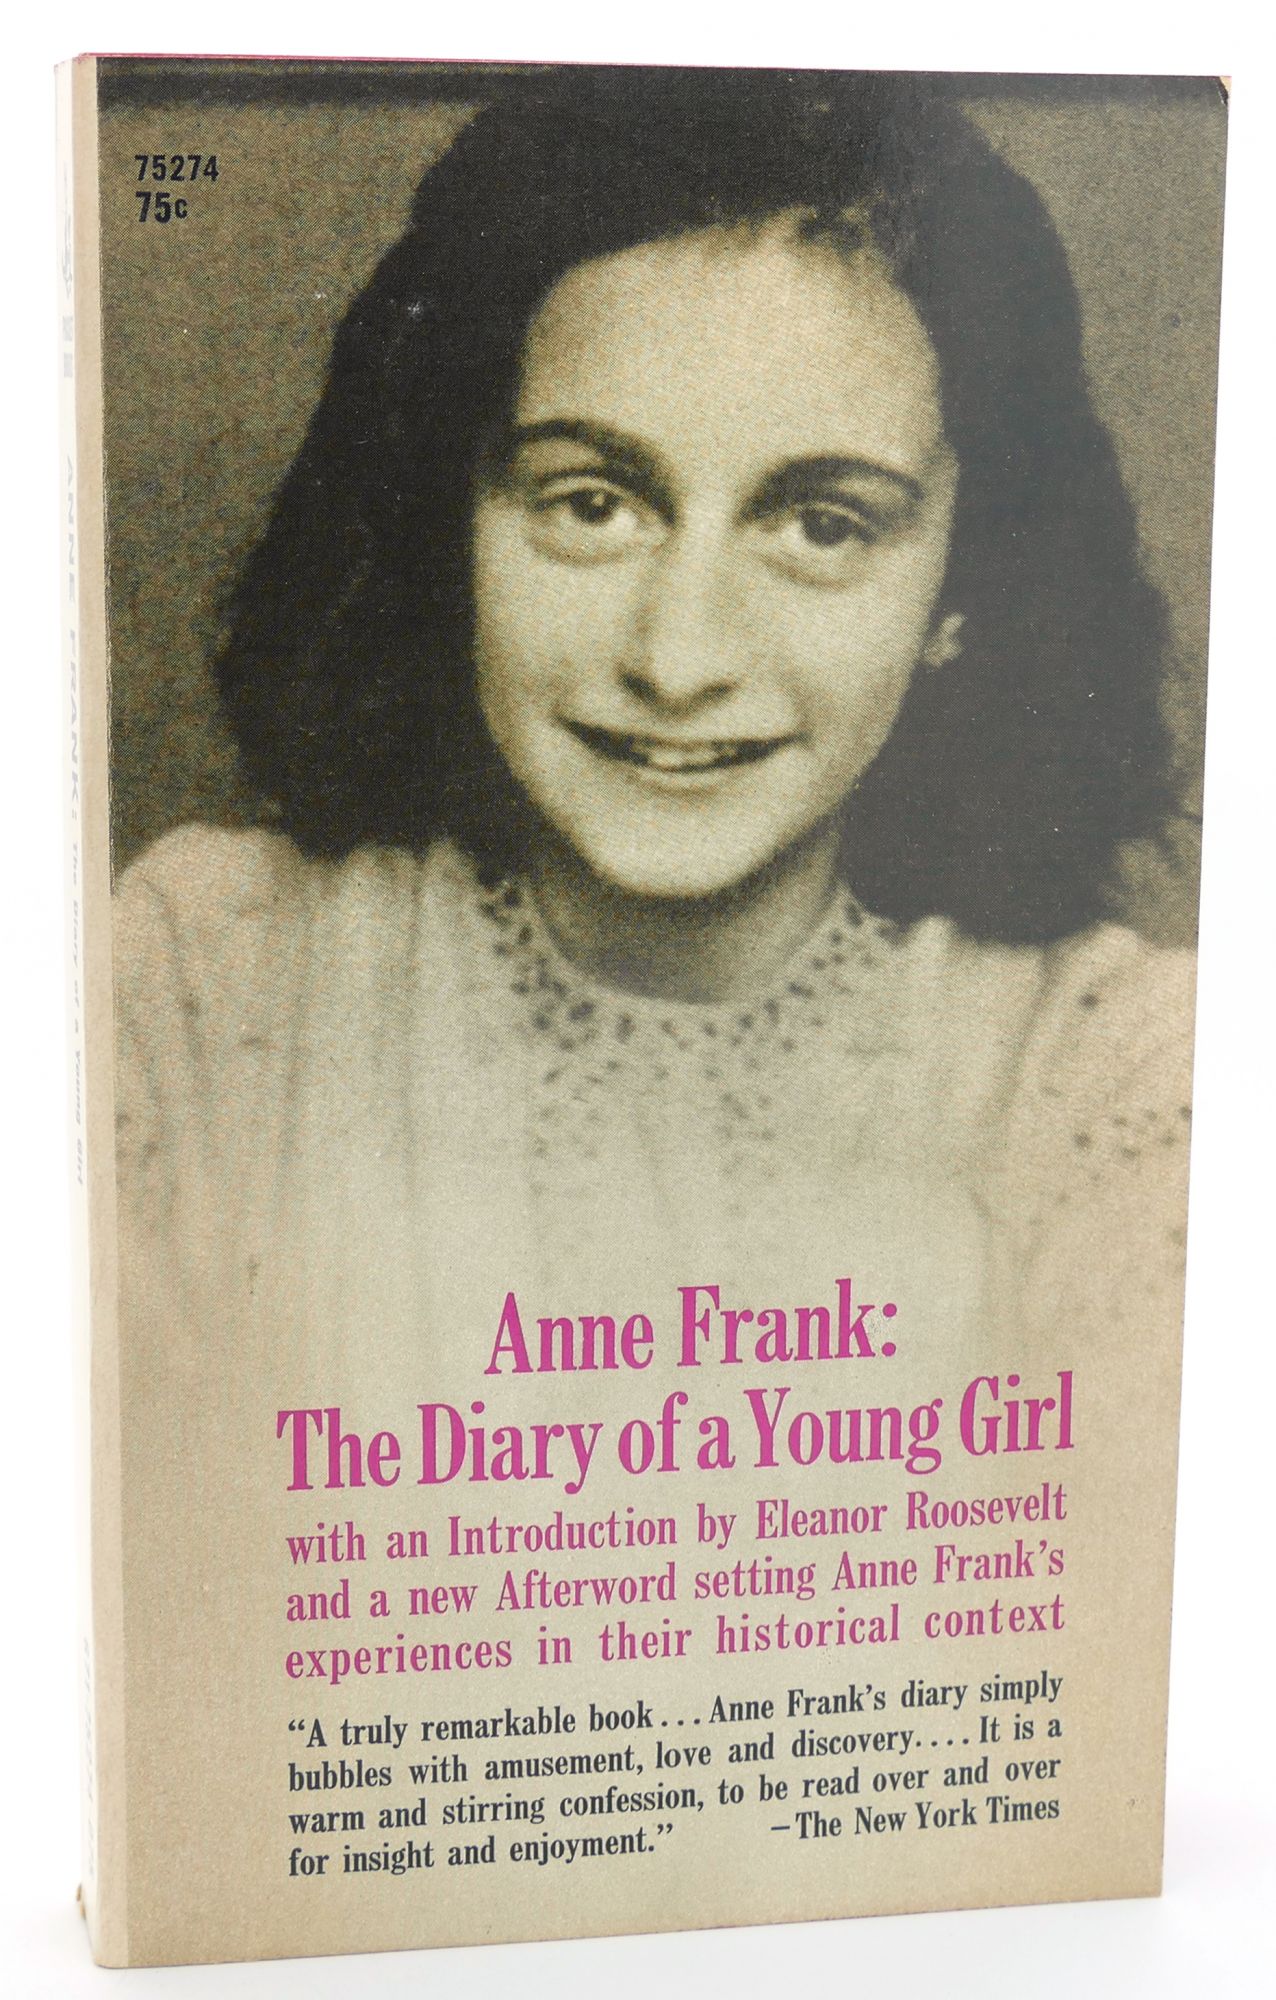 World War II Victim ANNE FRANK Glossy 8x10 Photo Famous Portrait Print Poster 